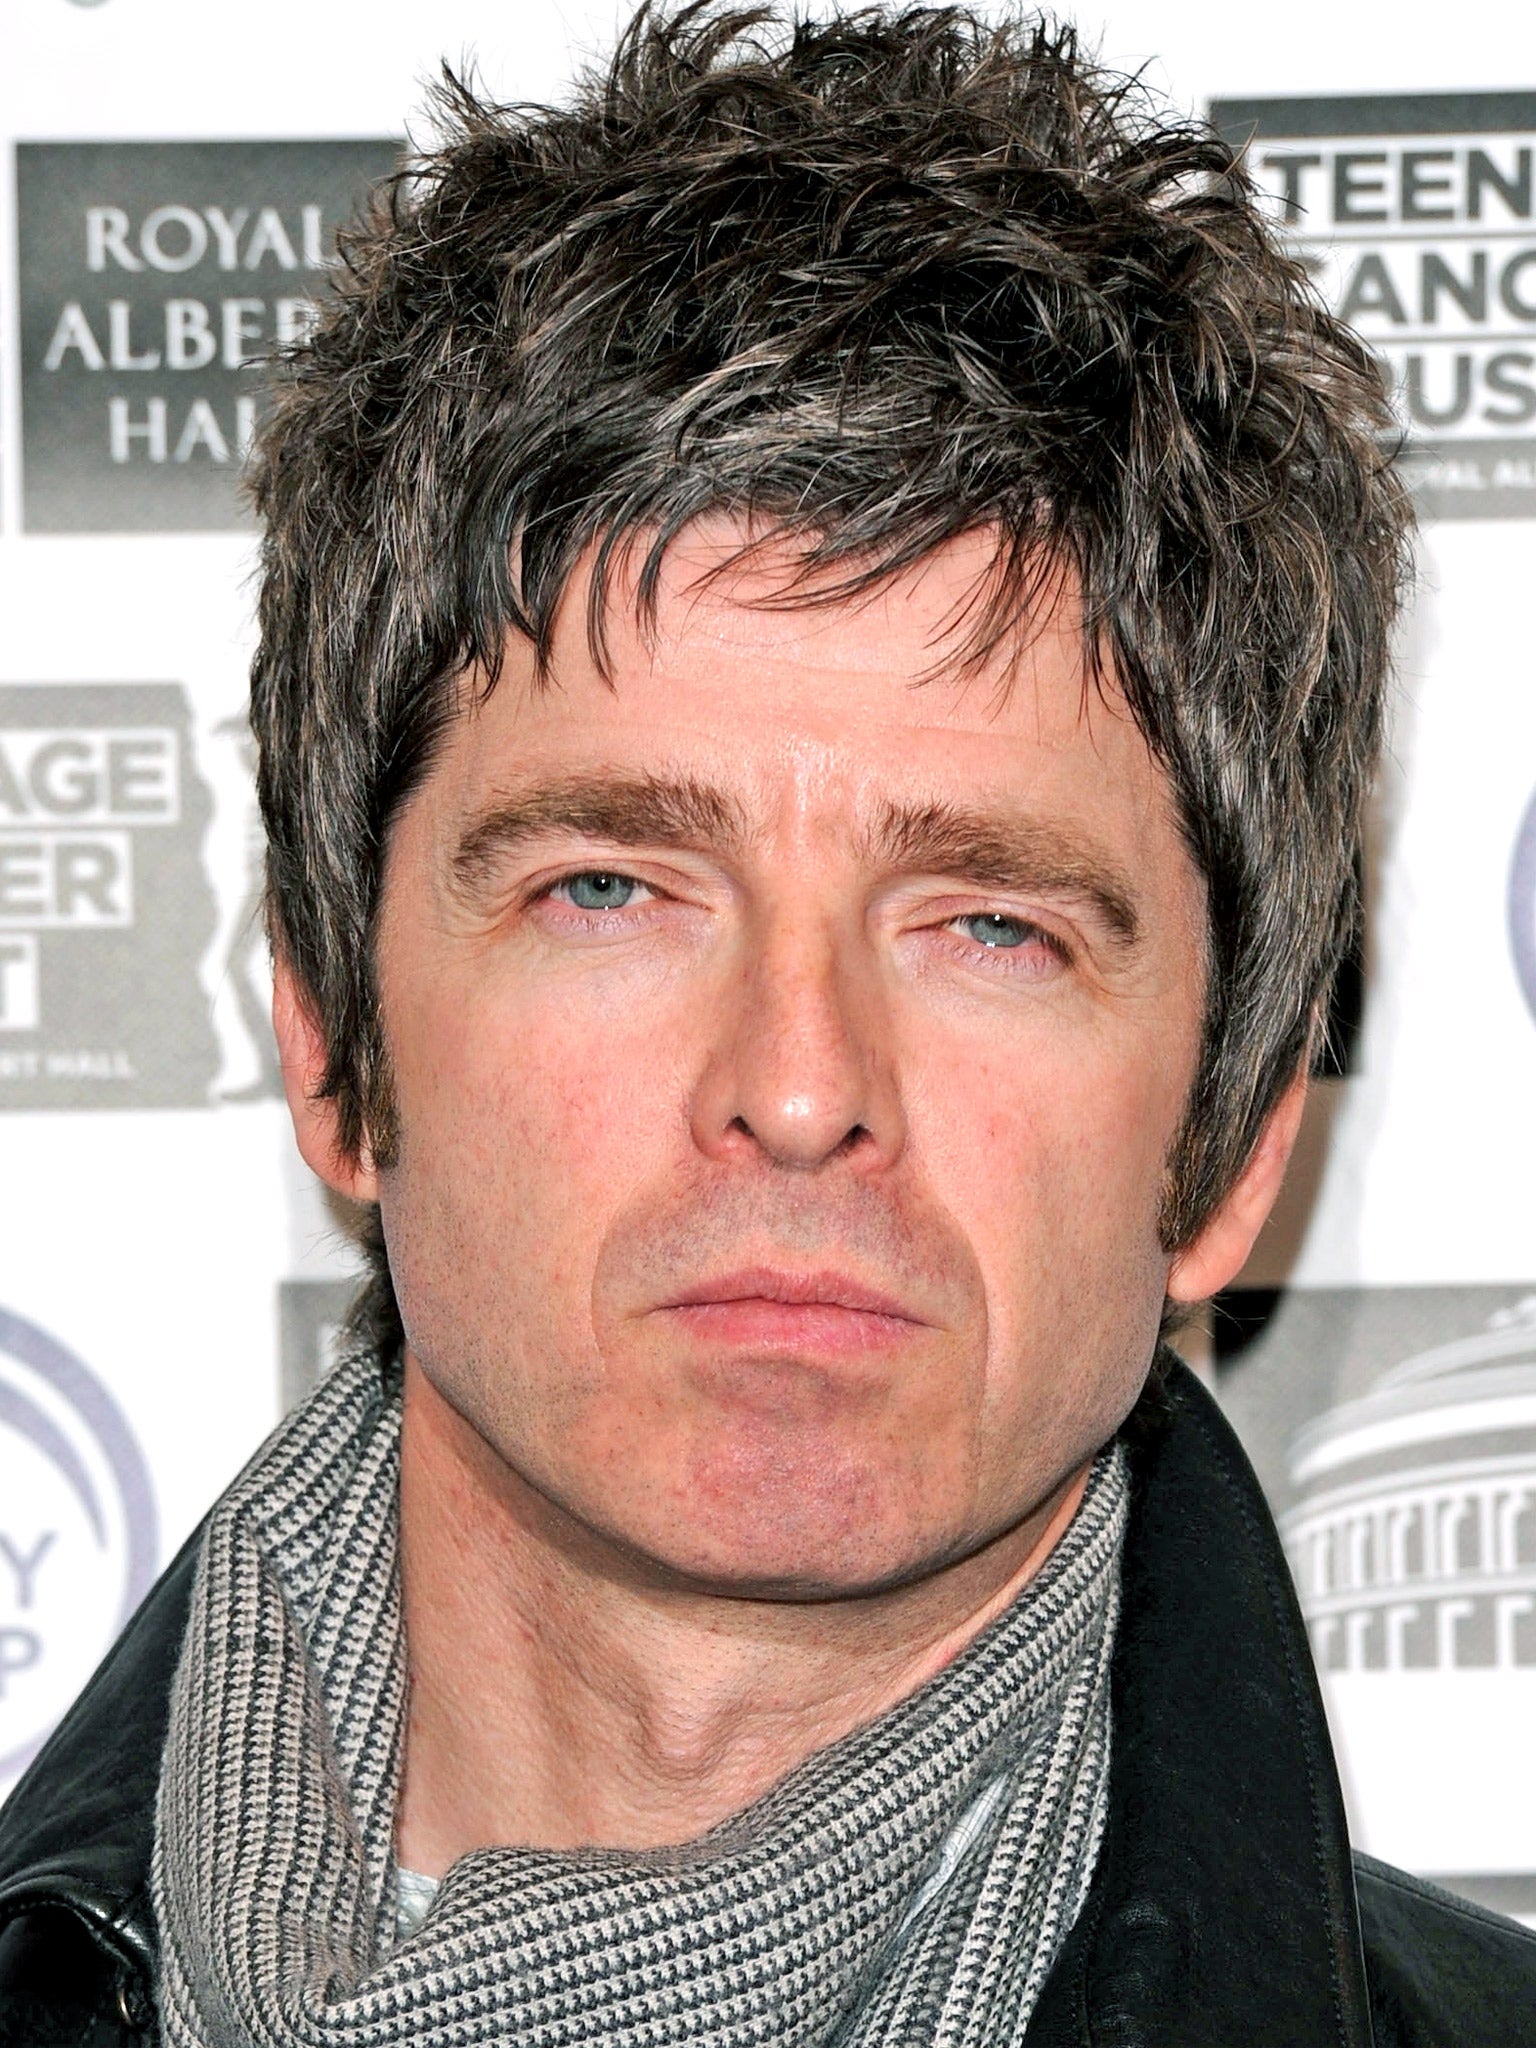 Oasis songwriter Noel Gallagher